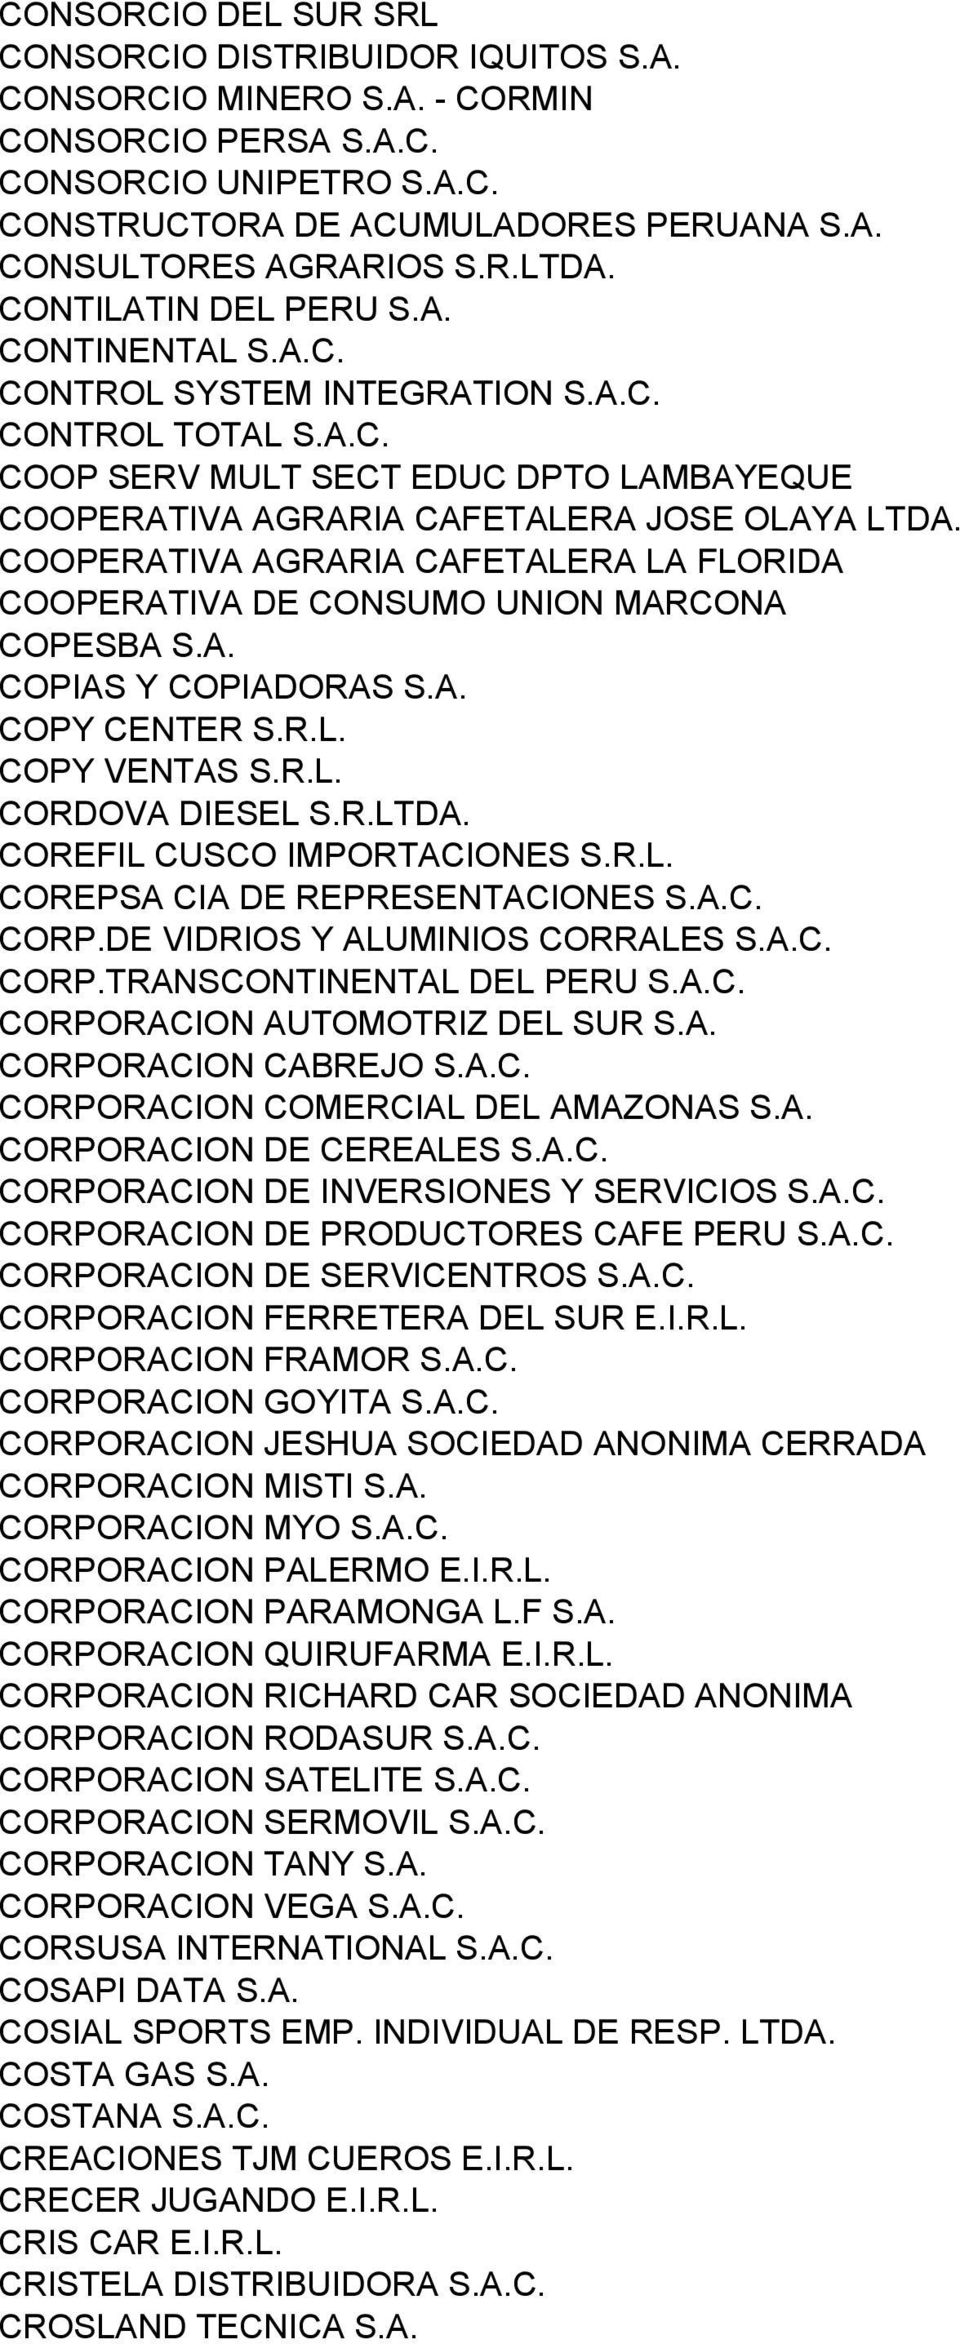 COOPERATIVA AGRARIA CAFETALERA LA FLORIDA COOPERATIVA DE CONSUMO UNION MARCONA COPESBA S.A. COPIAS Y COPIADORAS S.A. COPY CENTER S.R.L. COPY VENTAS S.R.L. CORDOVA DIESEL S.R.LTDA.